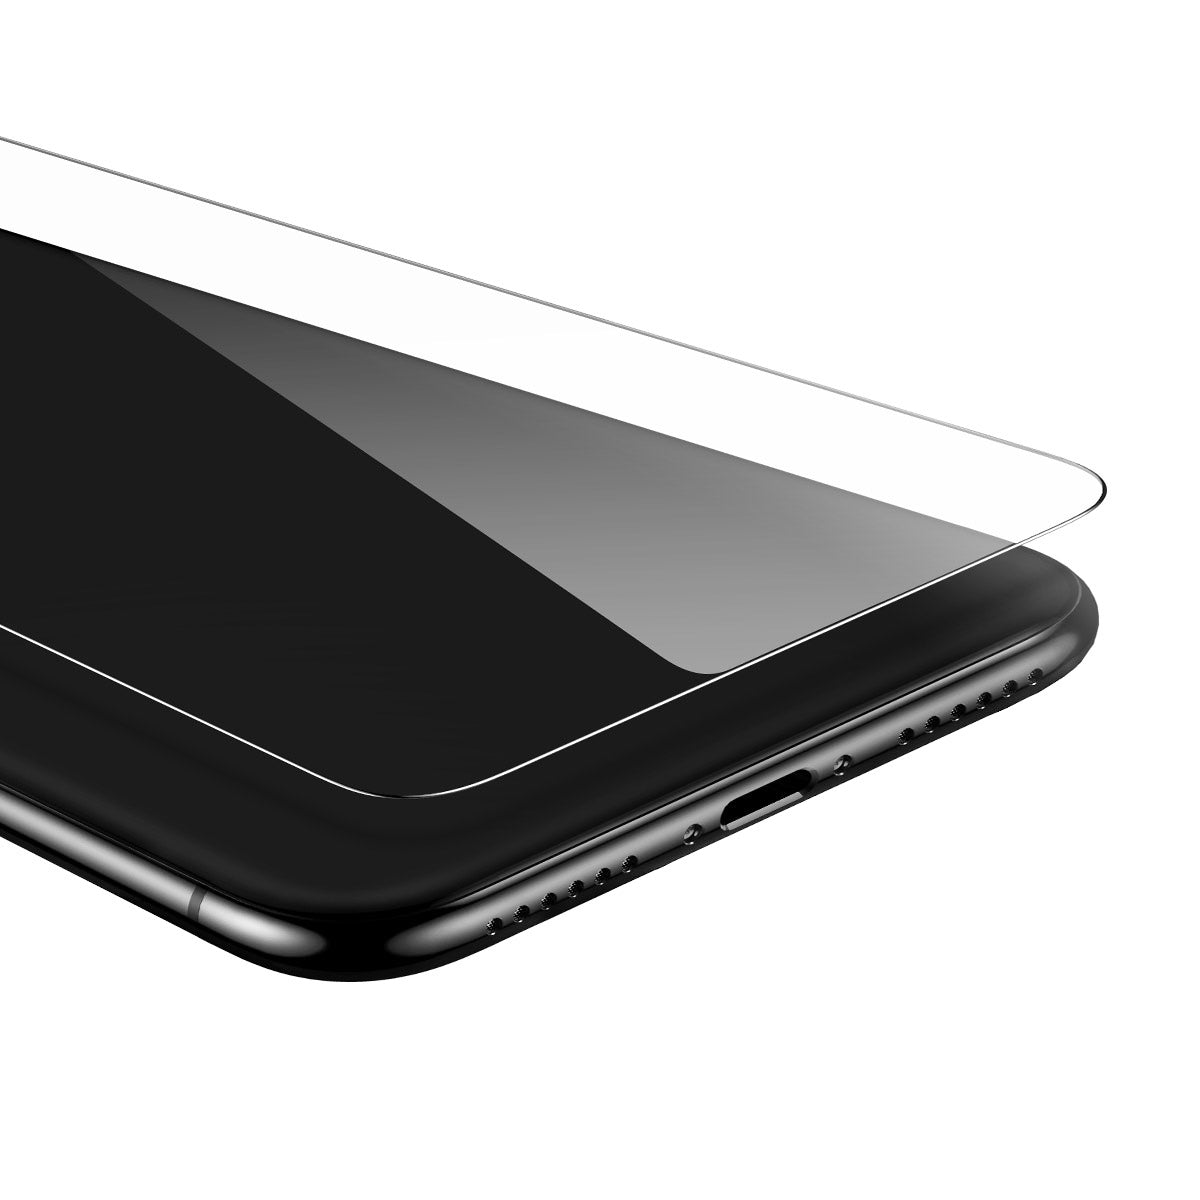 BASEUS 0.15mm Full-glass Tempered Glass Film (2pcs) for iPhone 11 Pro Max / 11 Pro / 11 / XS Max / XS / X / XR